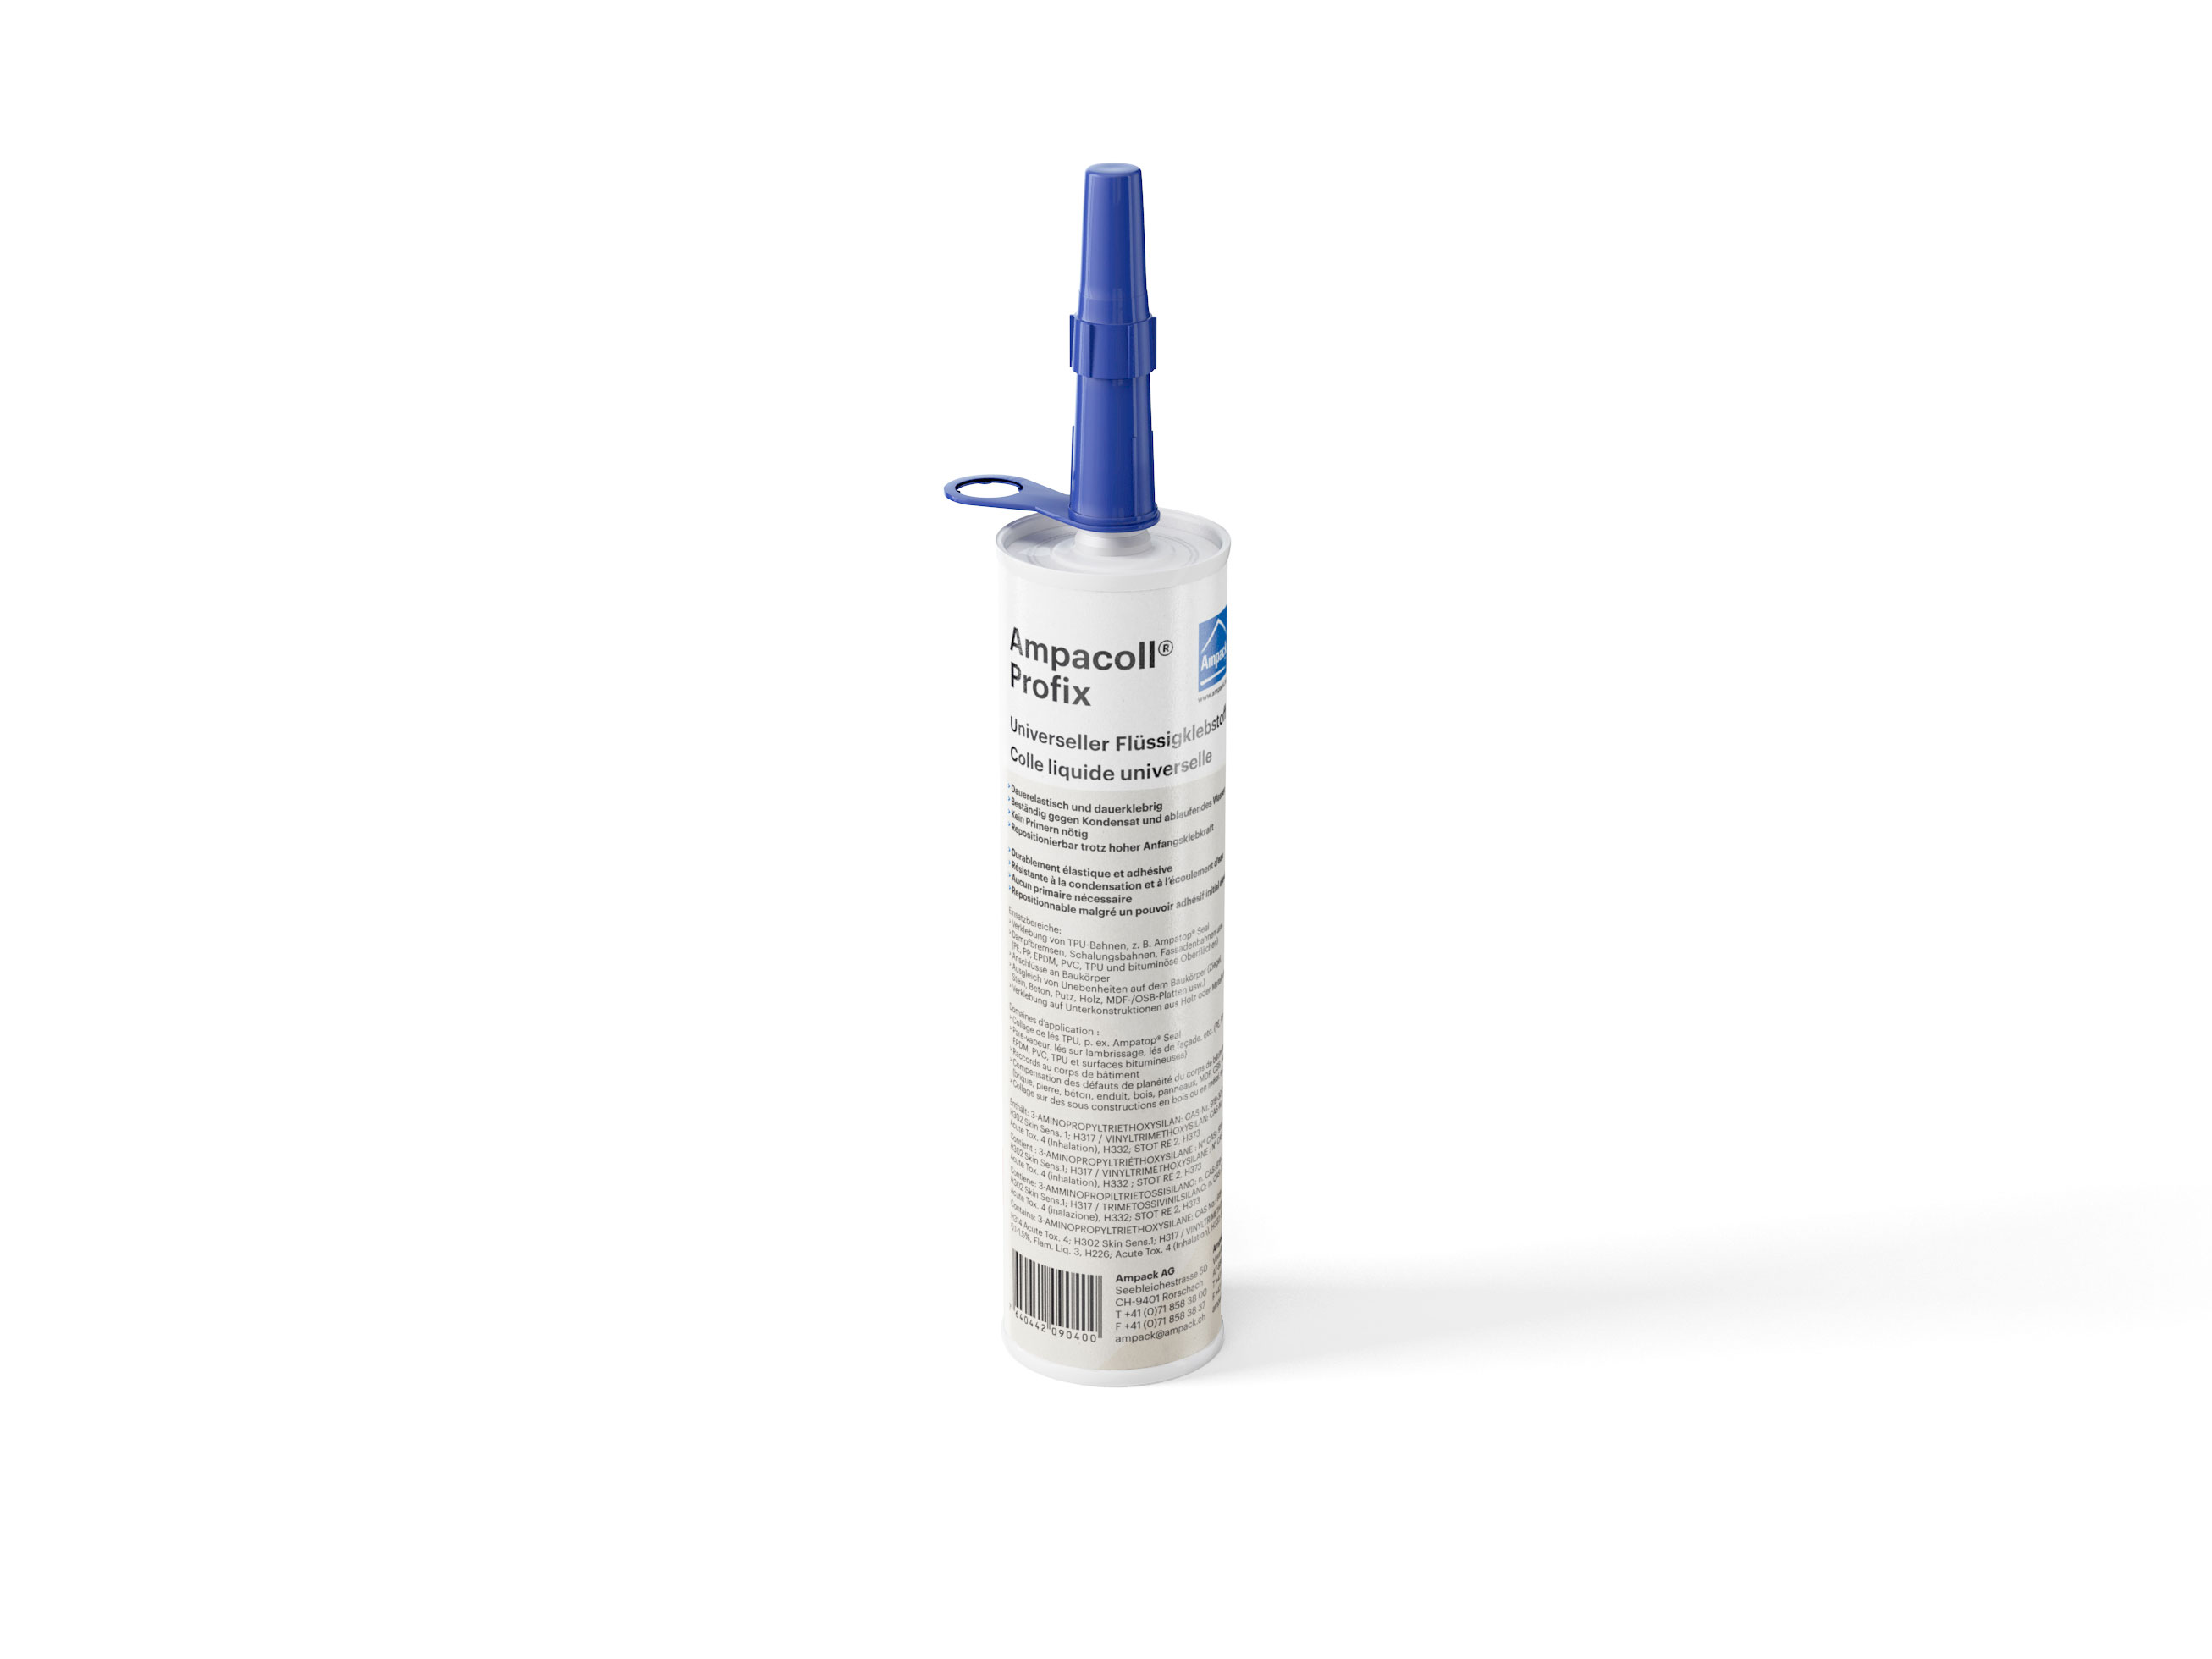 Product photo: Ampacoll Profix cartridge, liquid adhesive